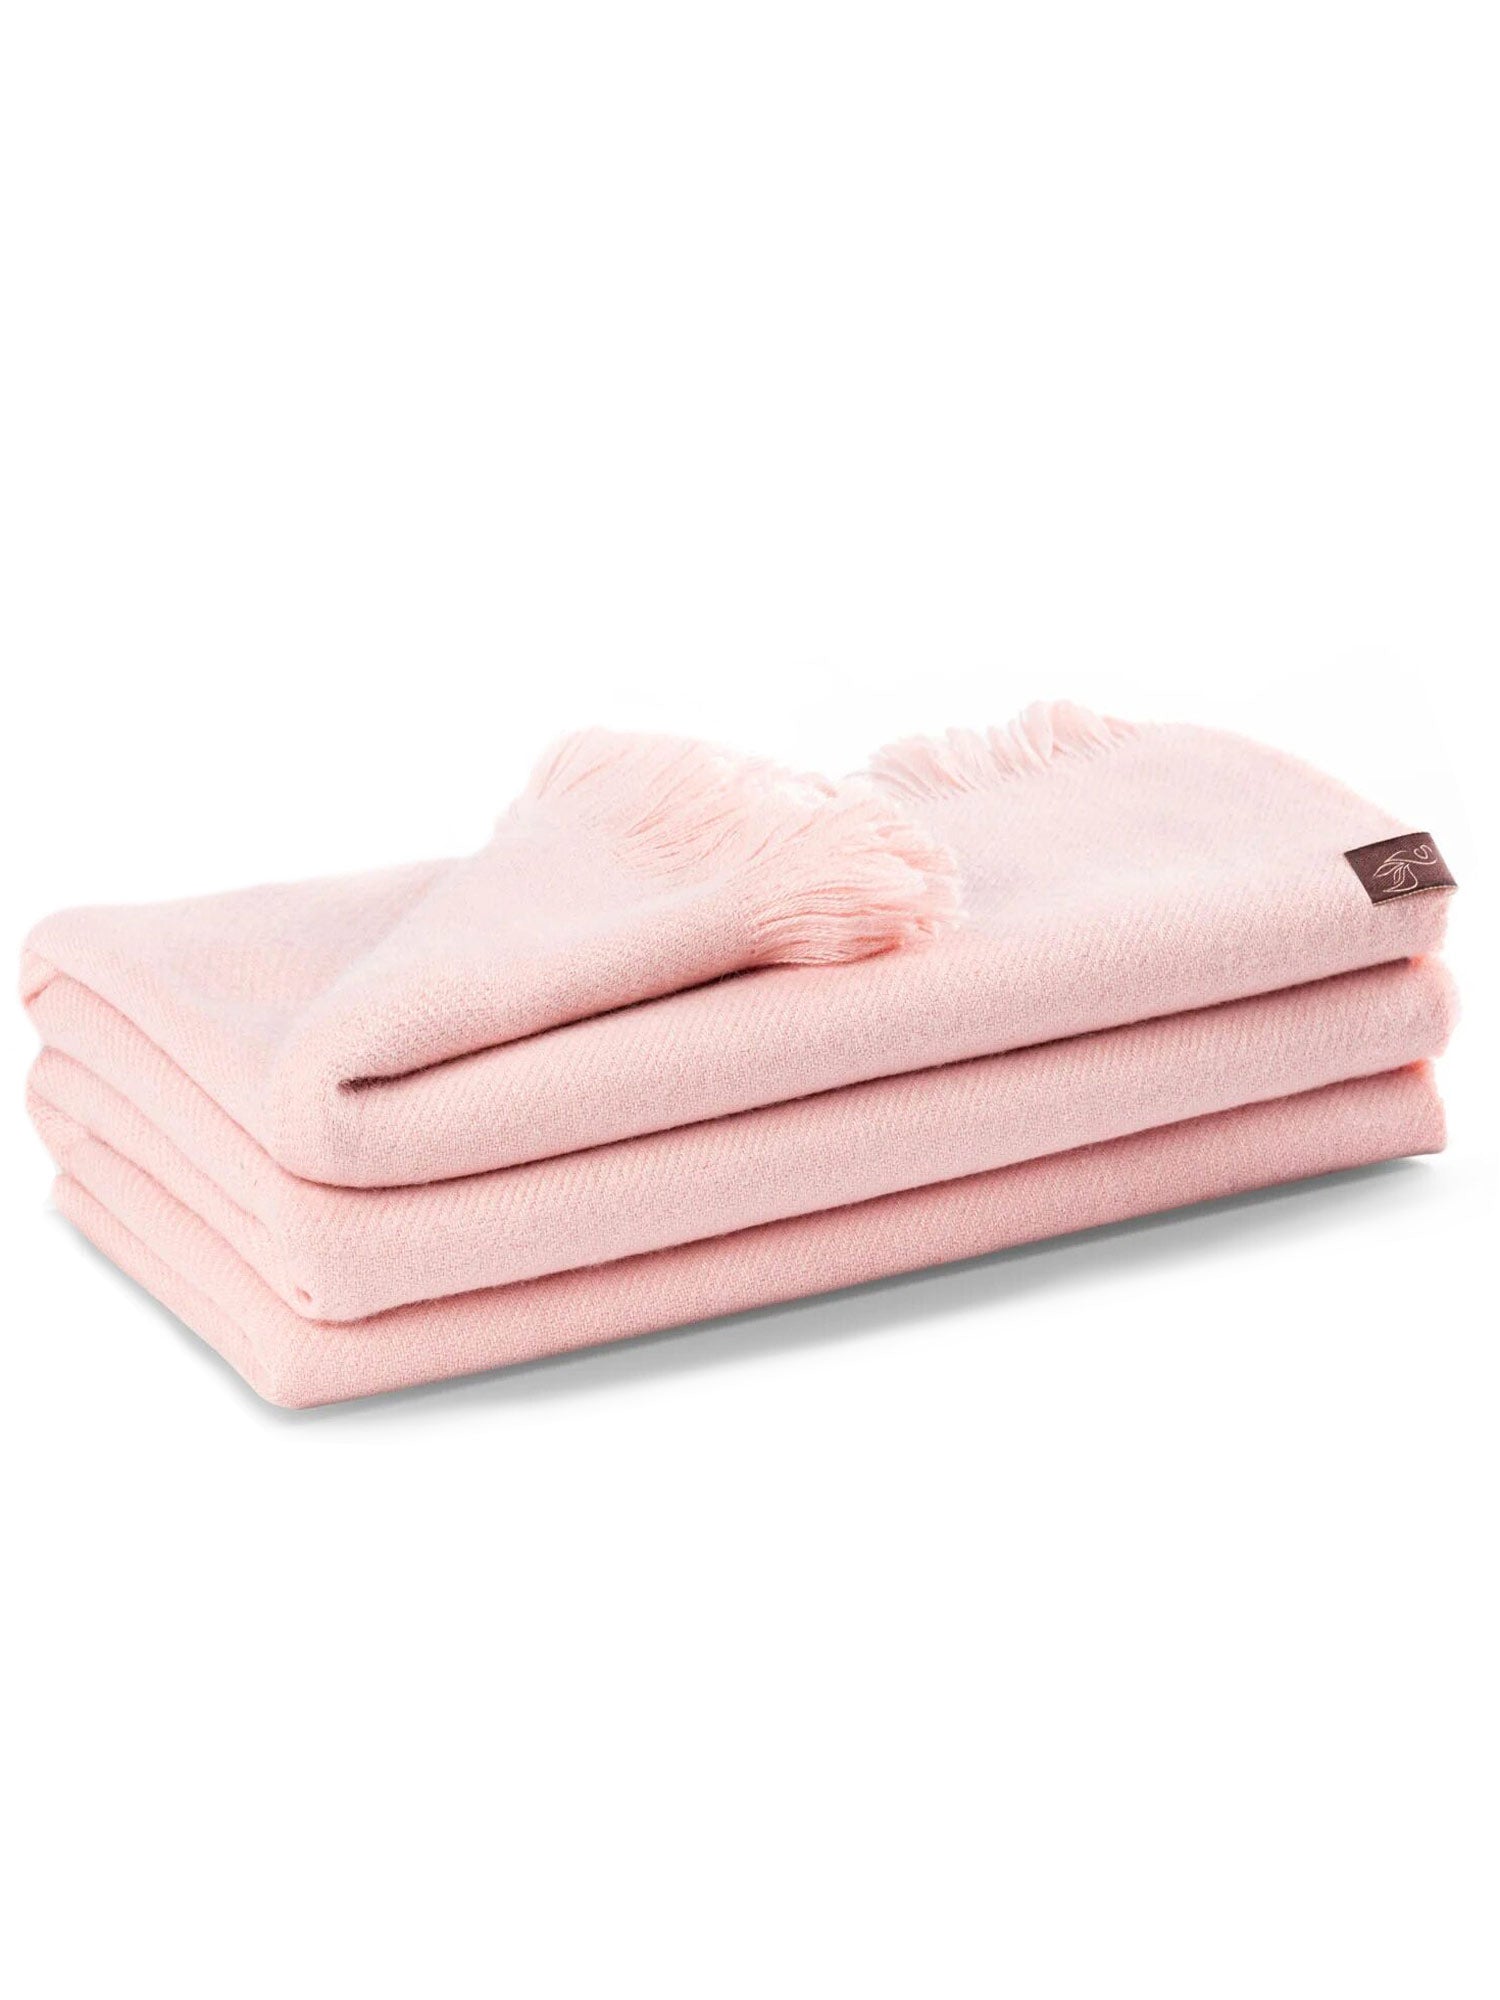 Inkari Alpaca Blanket - Elegante Pink